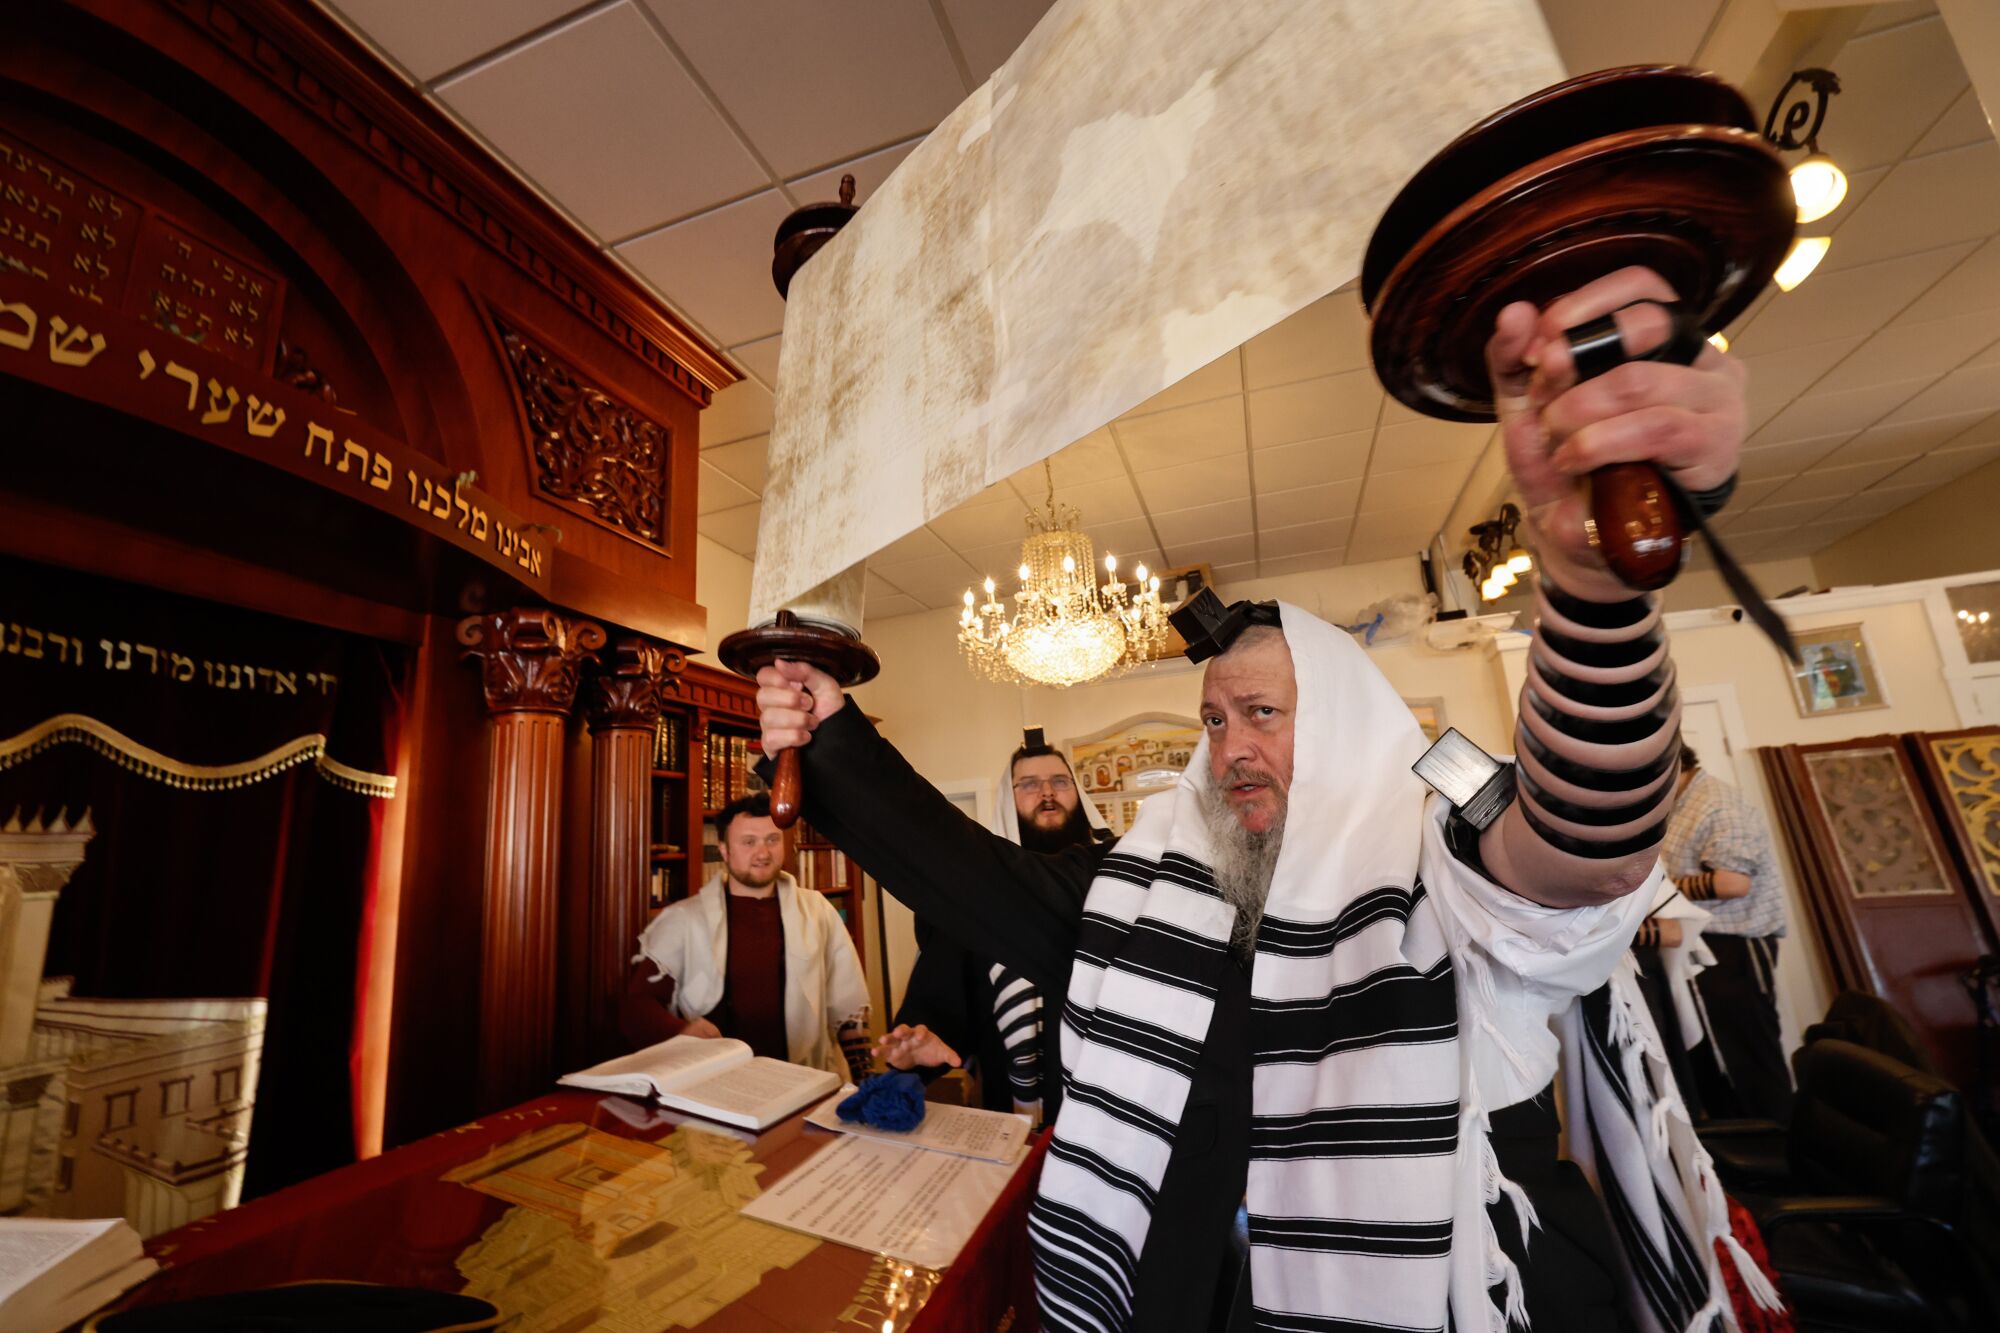 A rabbi raises the Torah at the Schneerson Jewish Center.